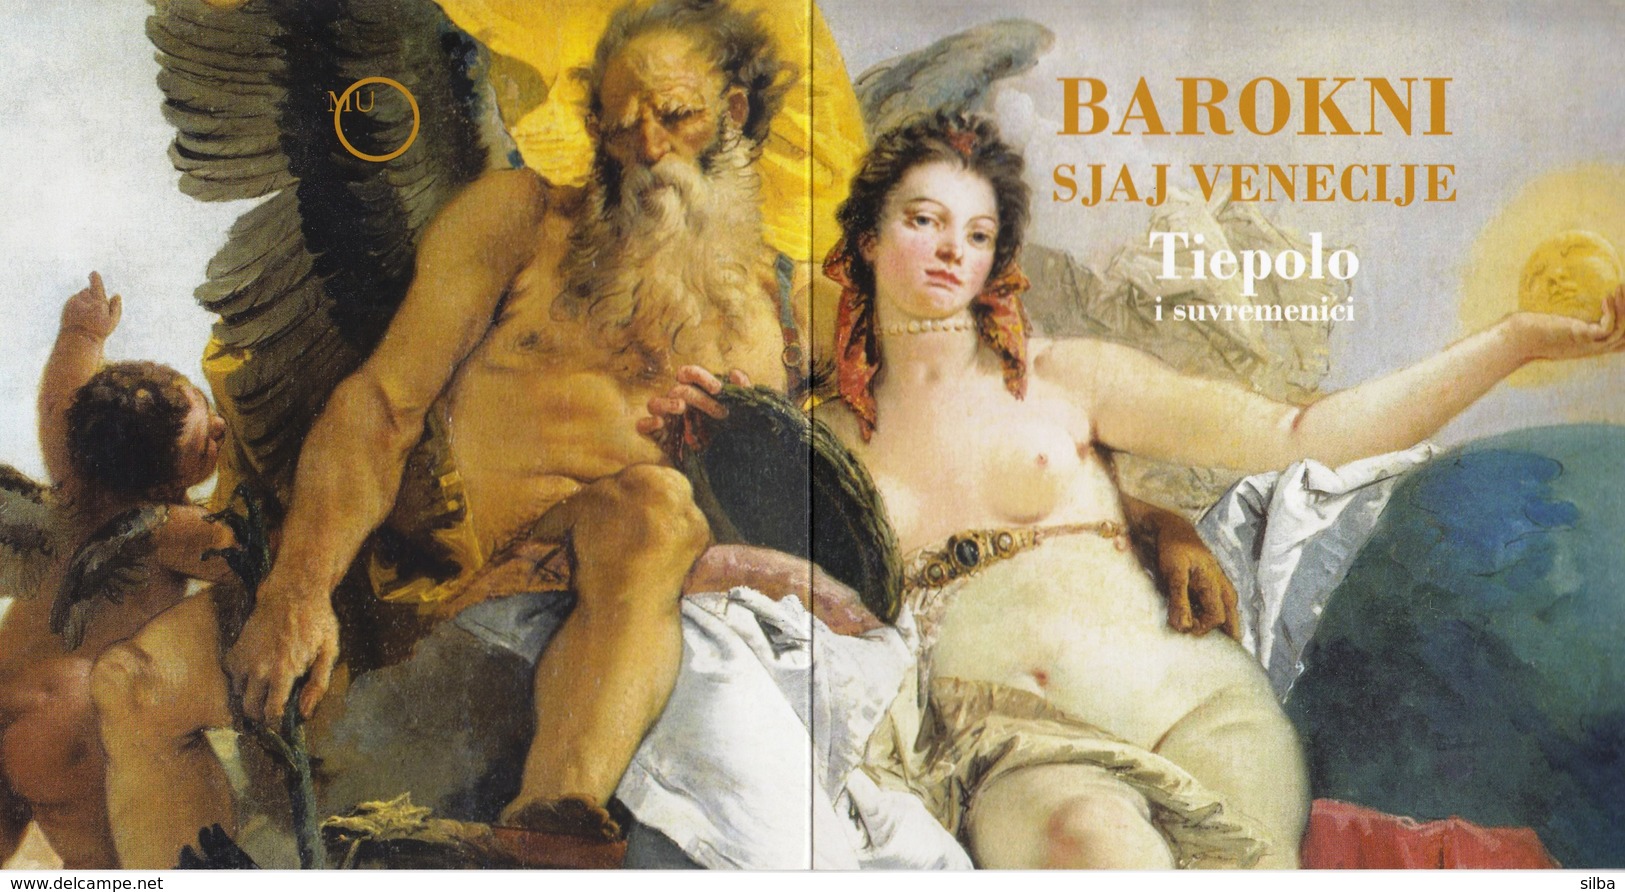 Croatia 2017 / Museum  Of Arts And Crafts / Splendour Of Venetian Baroque, Tiepolo / Exhibition Opening Invitation Card - Advertising